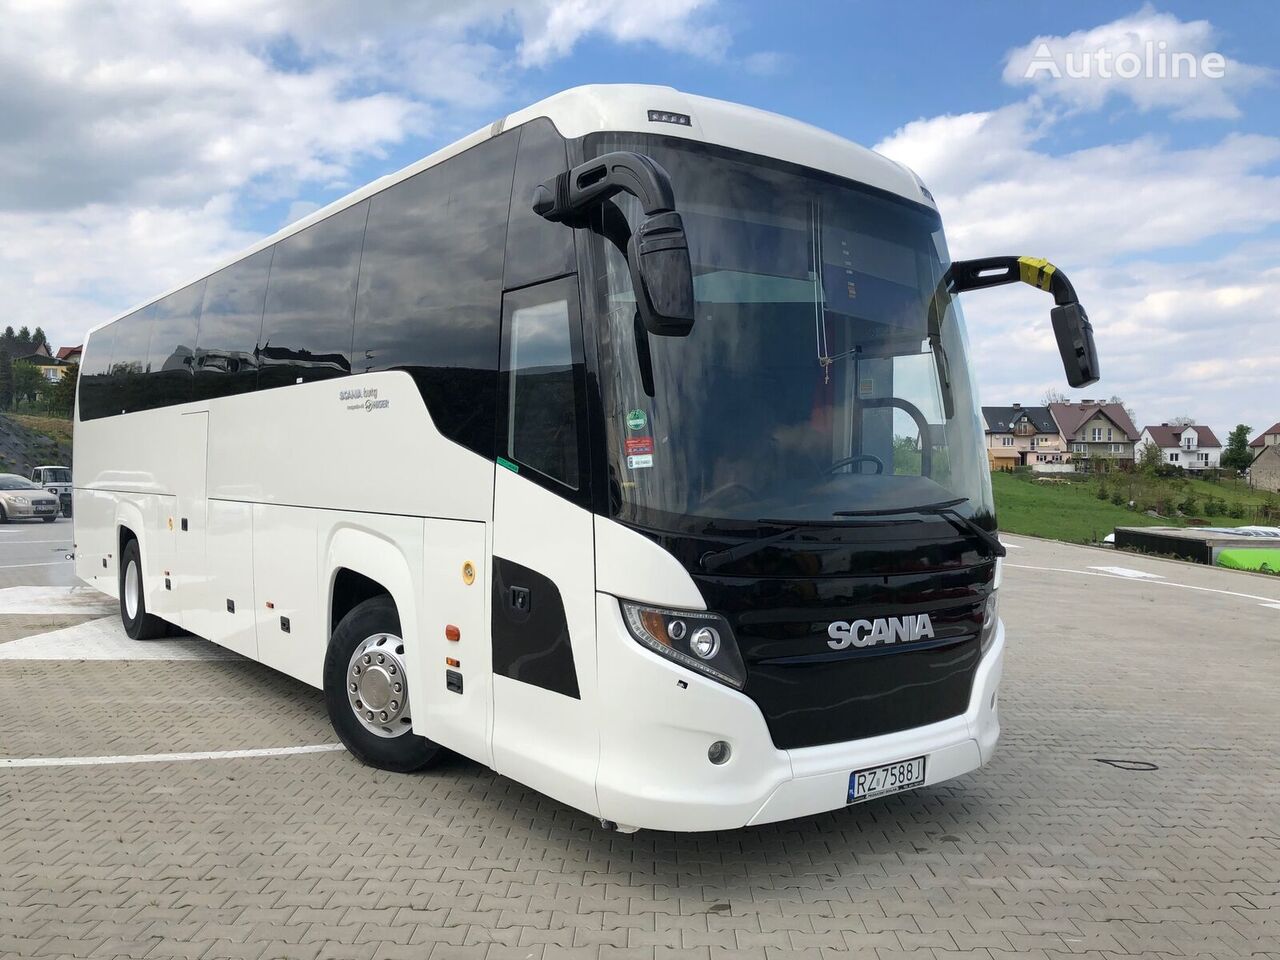 Scania TOURING HIGER  HD coach bus